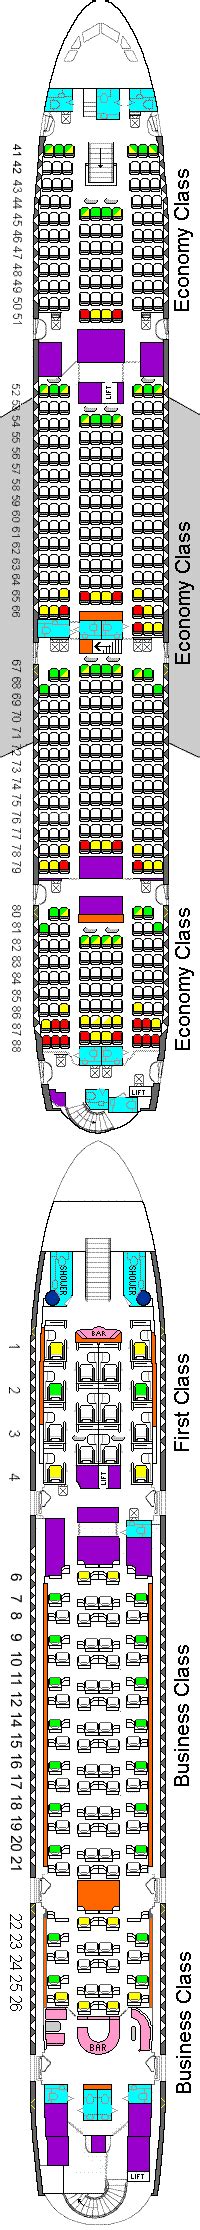 47 Seat Plan On A380 Emirates